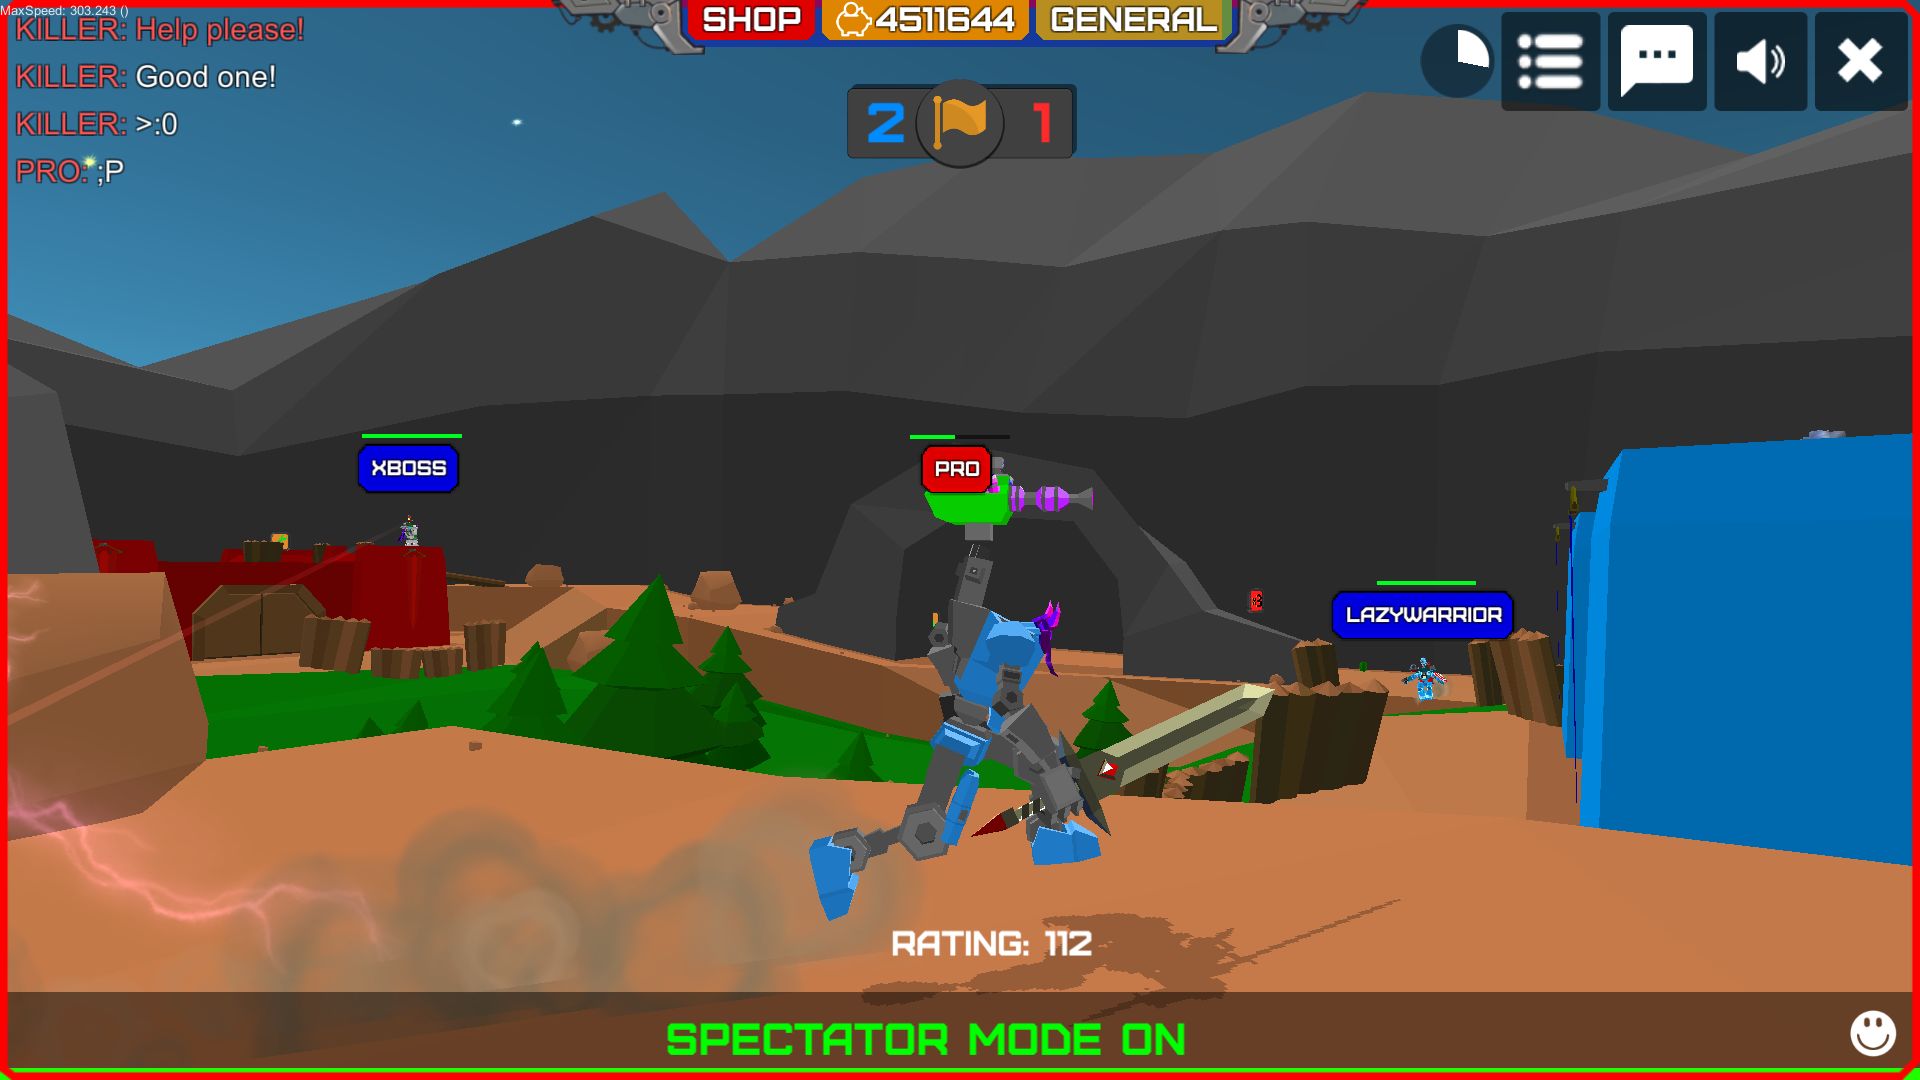 Screenshot of Armored Squad: Mechs vs Robots